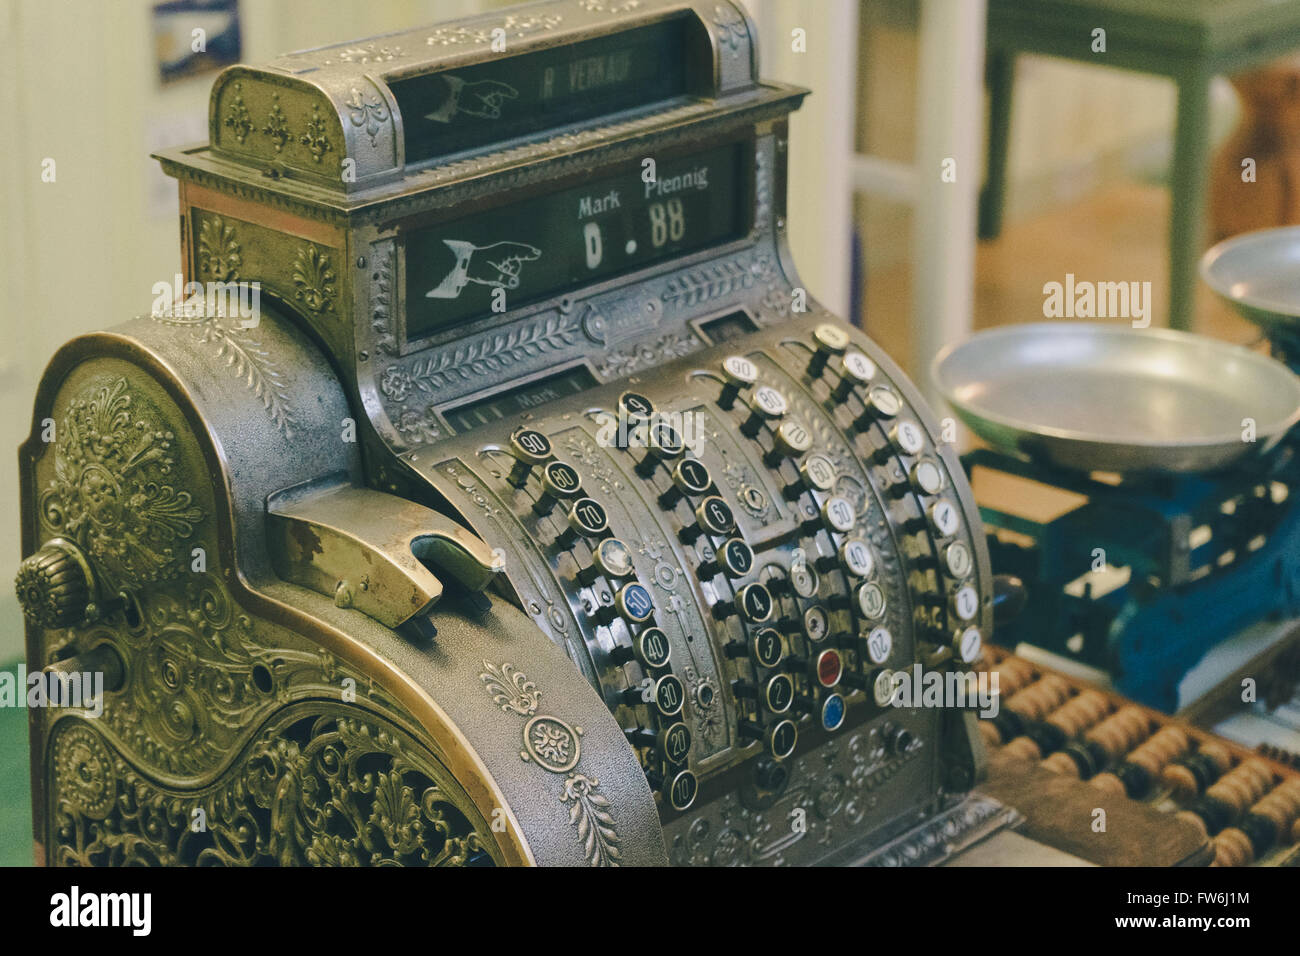 Retro style checkout machine, vintage toned image Stock Photo